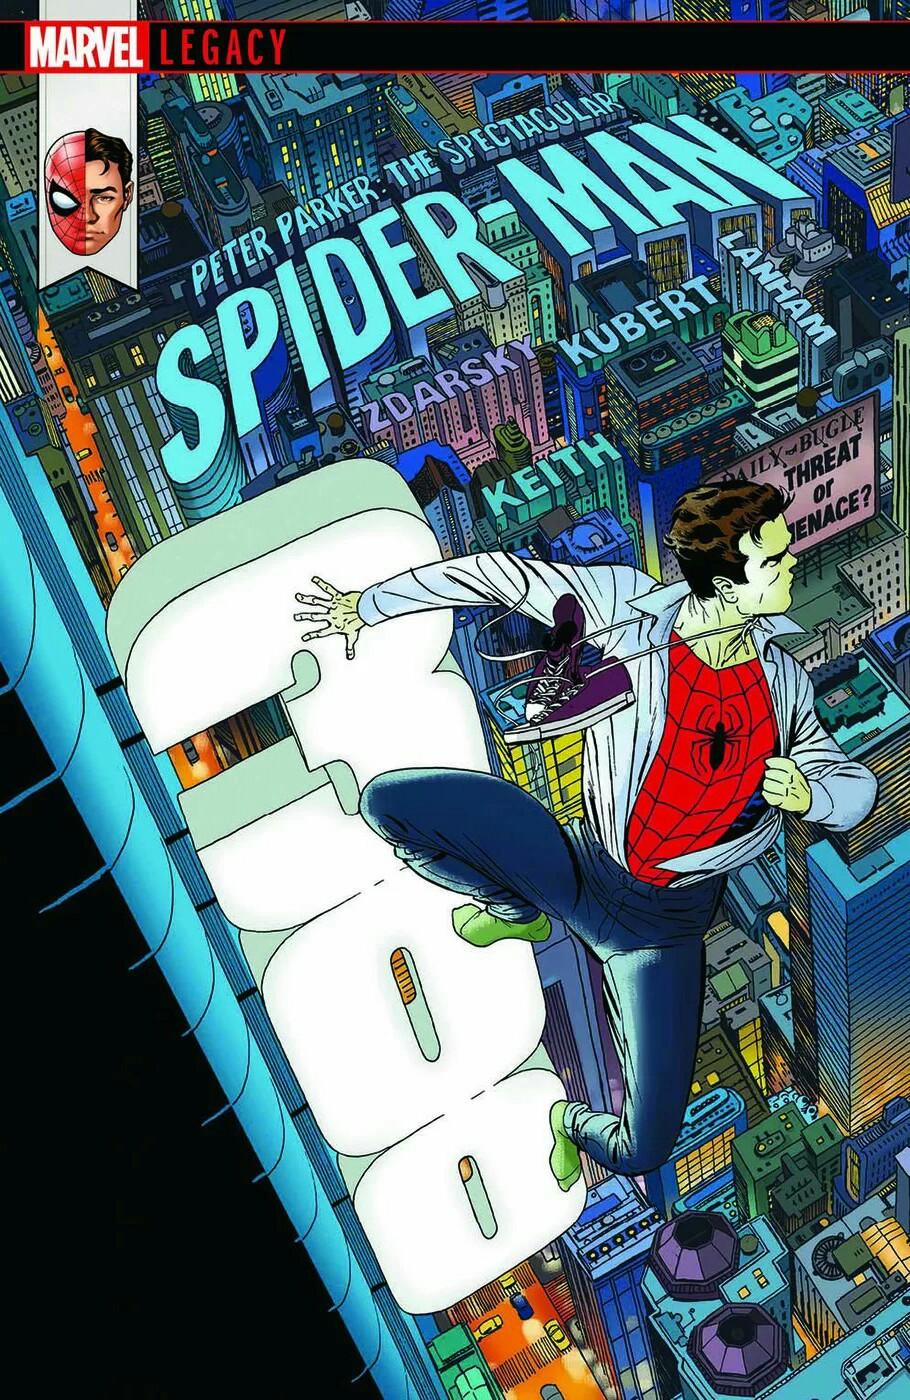 Peter Parker: The Spectacular Spider-Man Vol. 1 #300